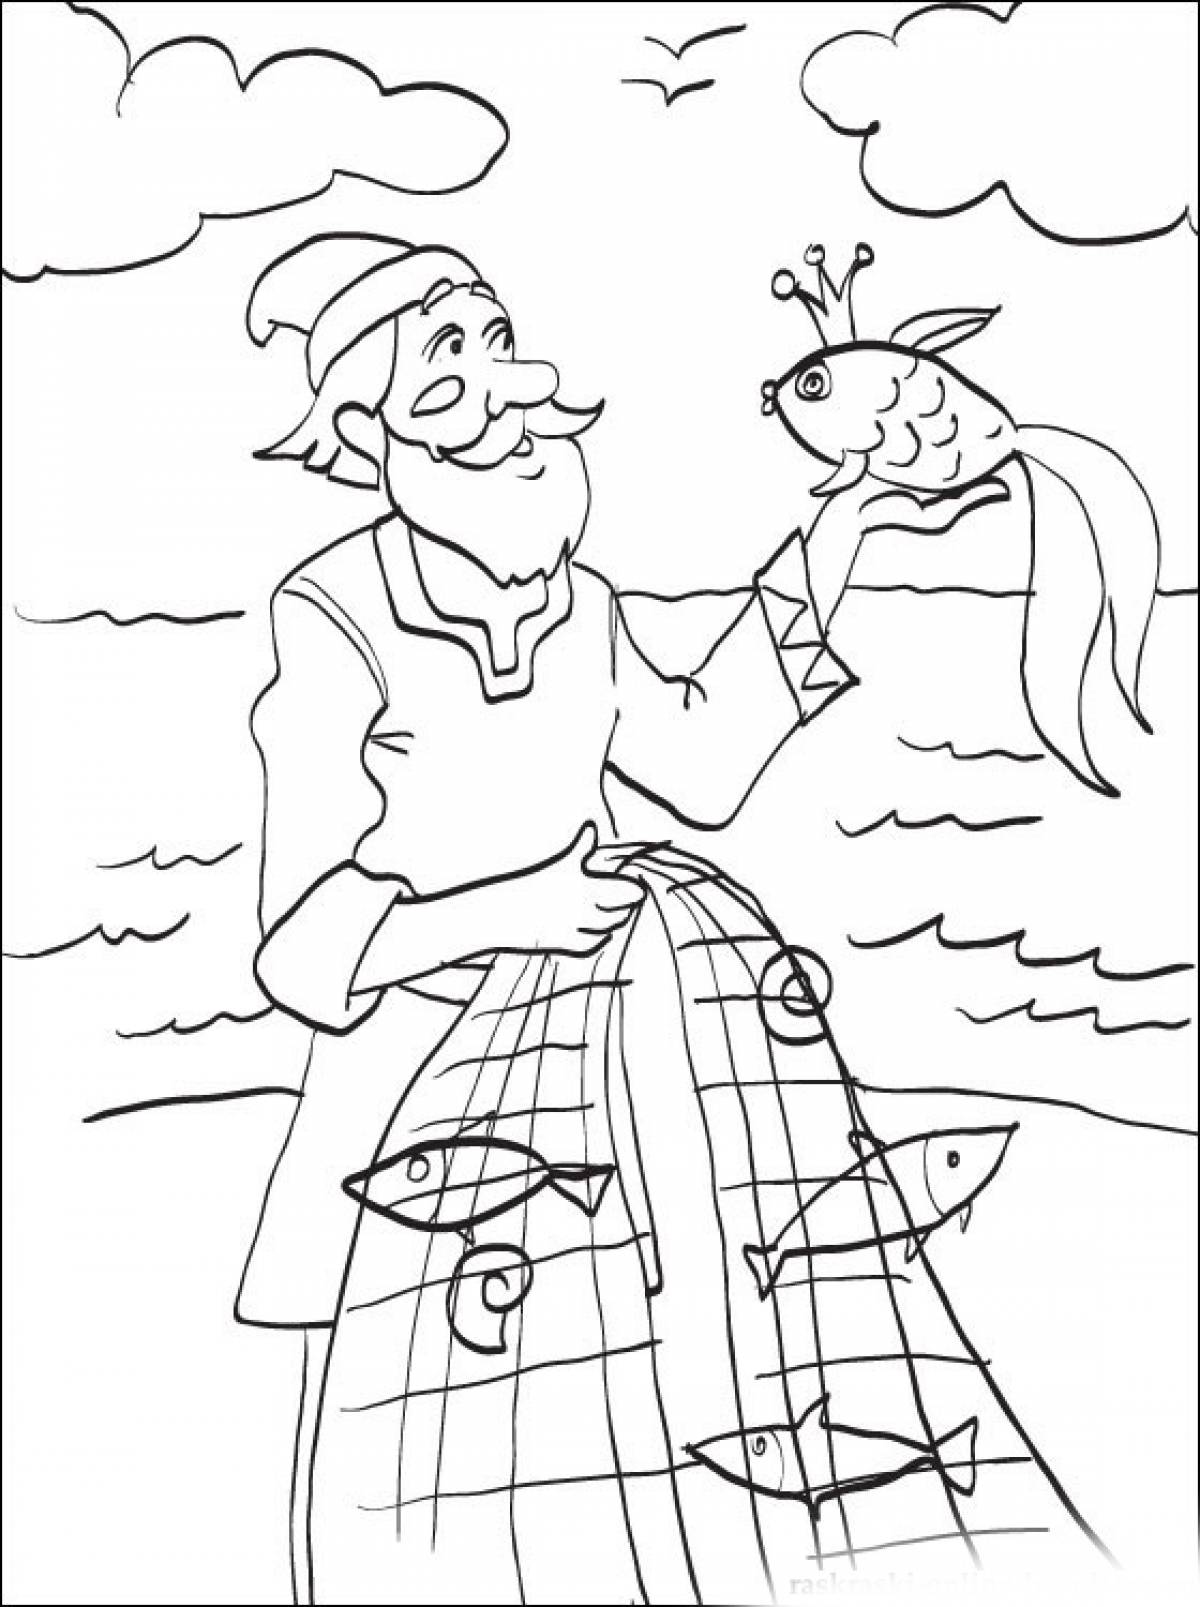 Картинки раскраски к сказке о рыбаке и рыбке Пушкина